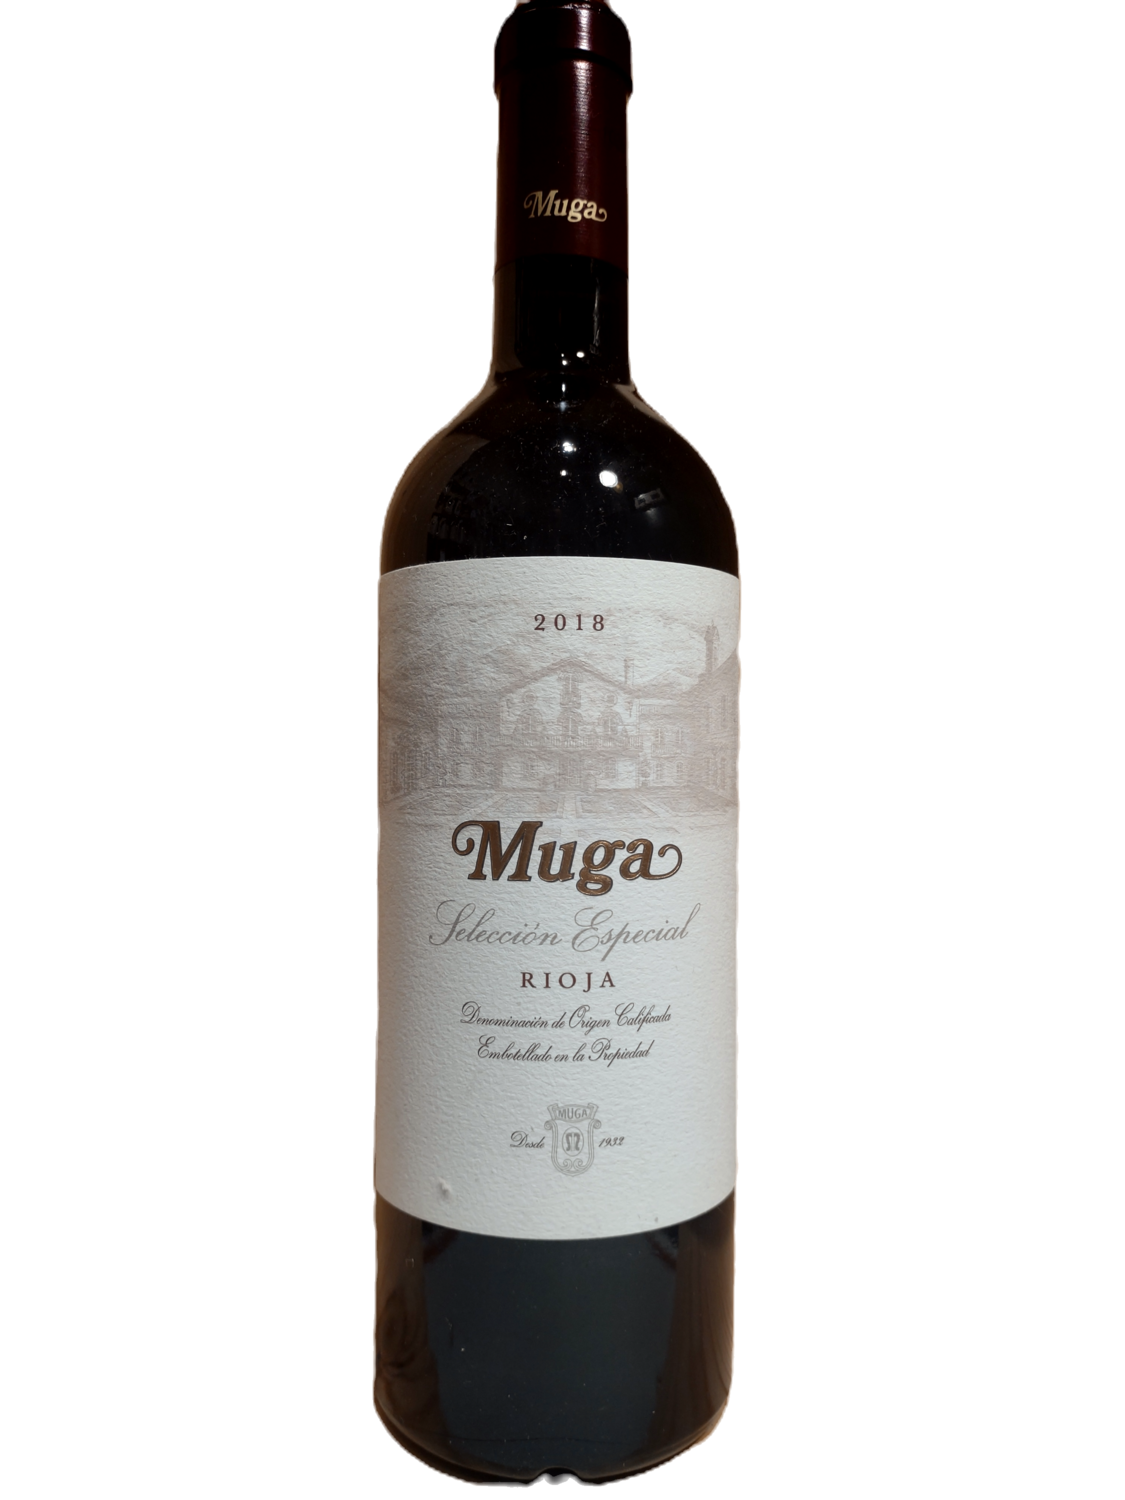 Muga Rioja Reserva "Seleccion Especial" Spain 2018